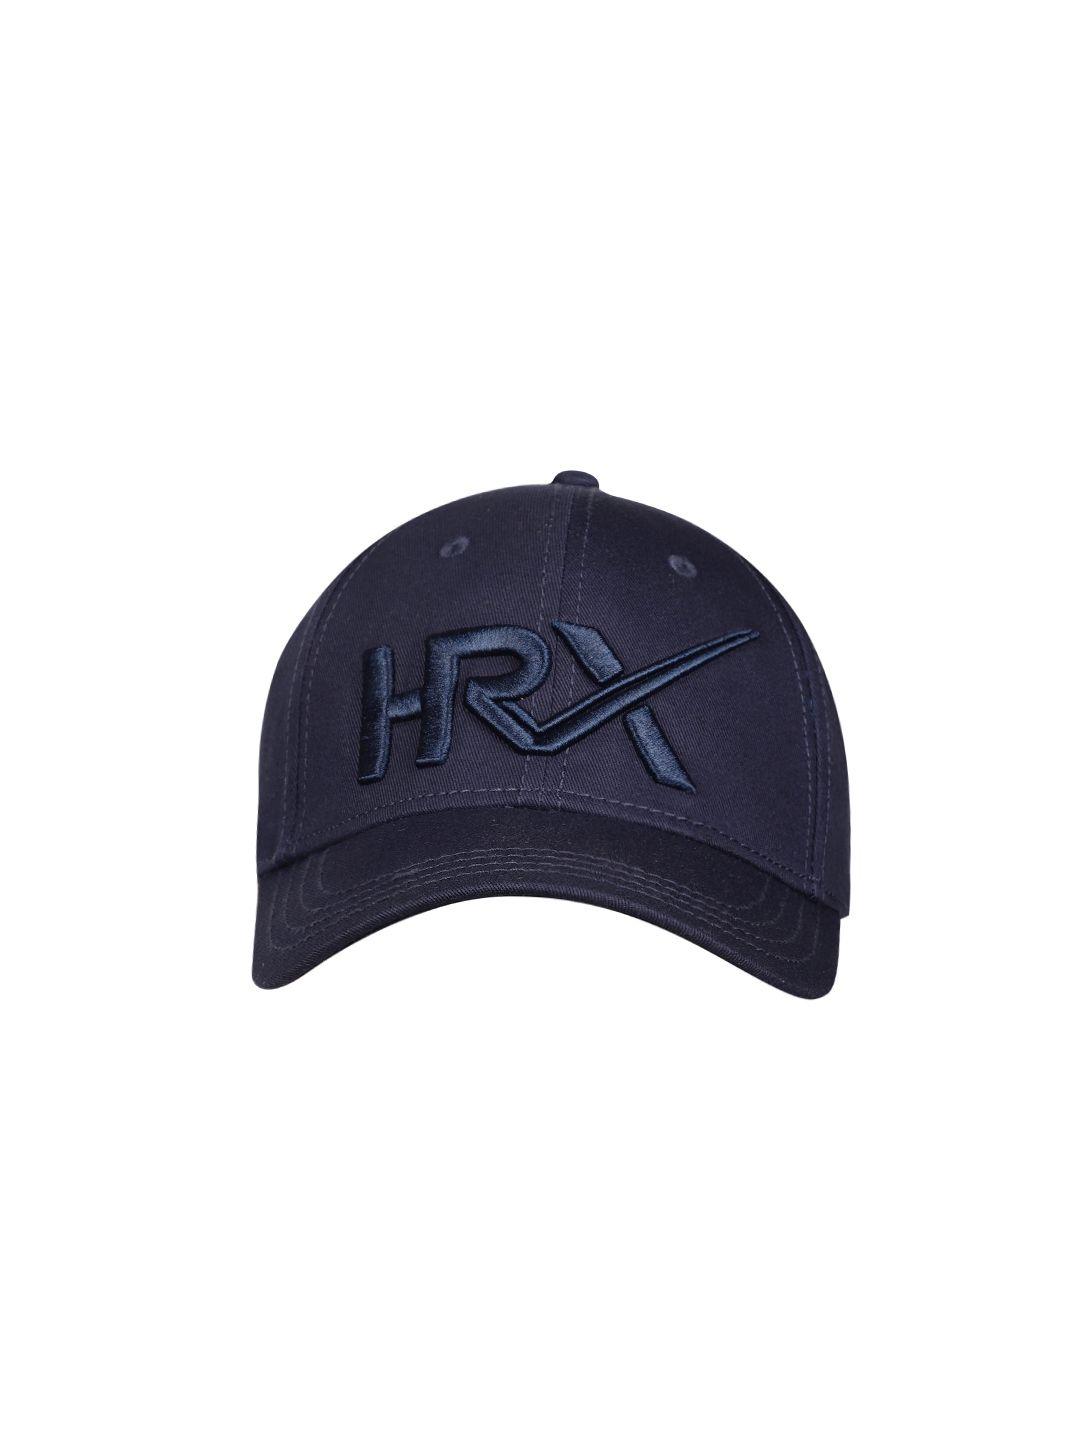 hrx-by-hrithik-roshan-unisex-navy-blue-solid-lifestyle-cap